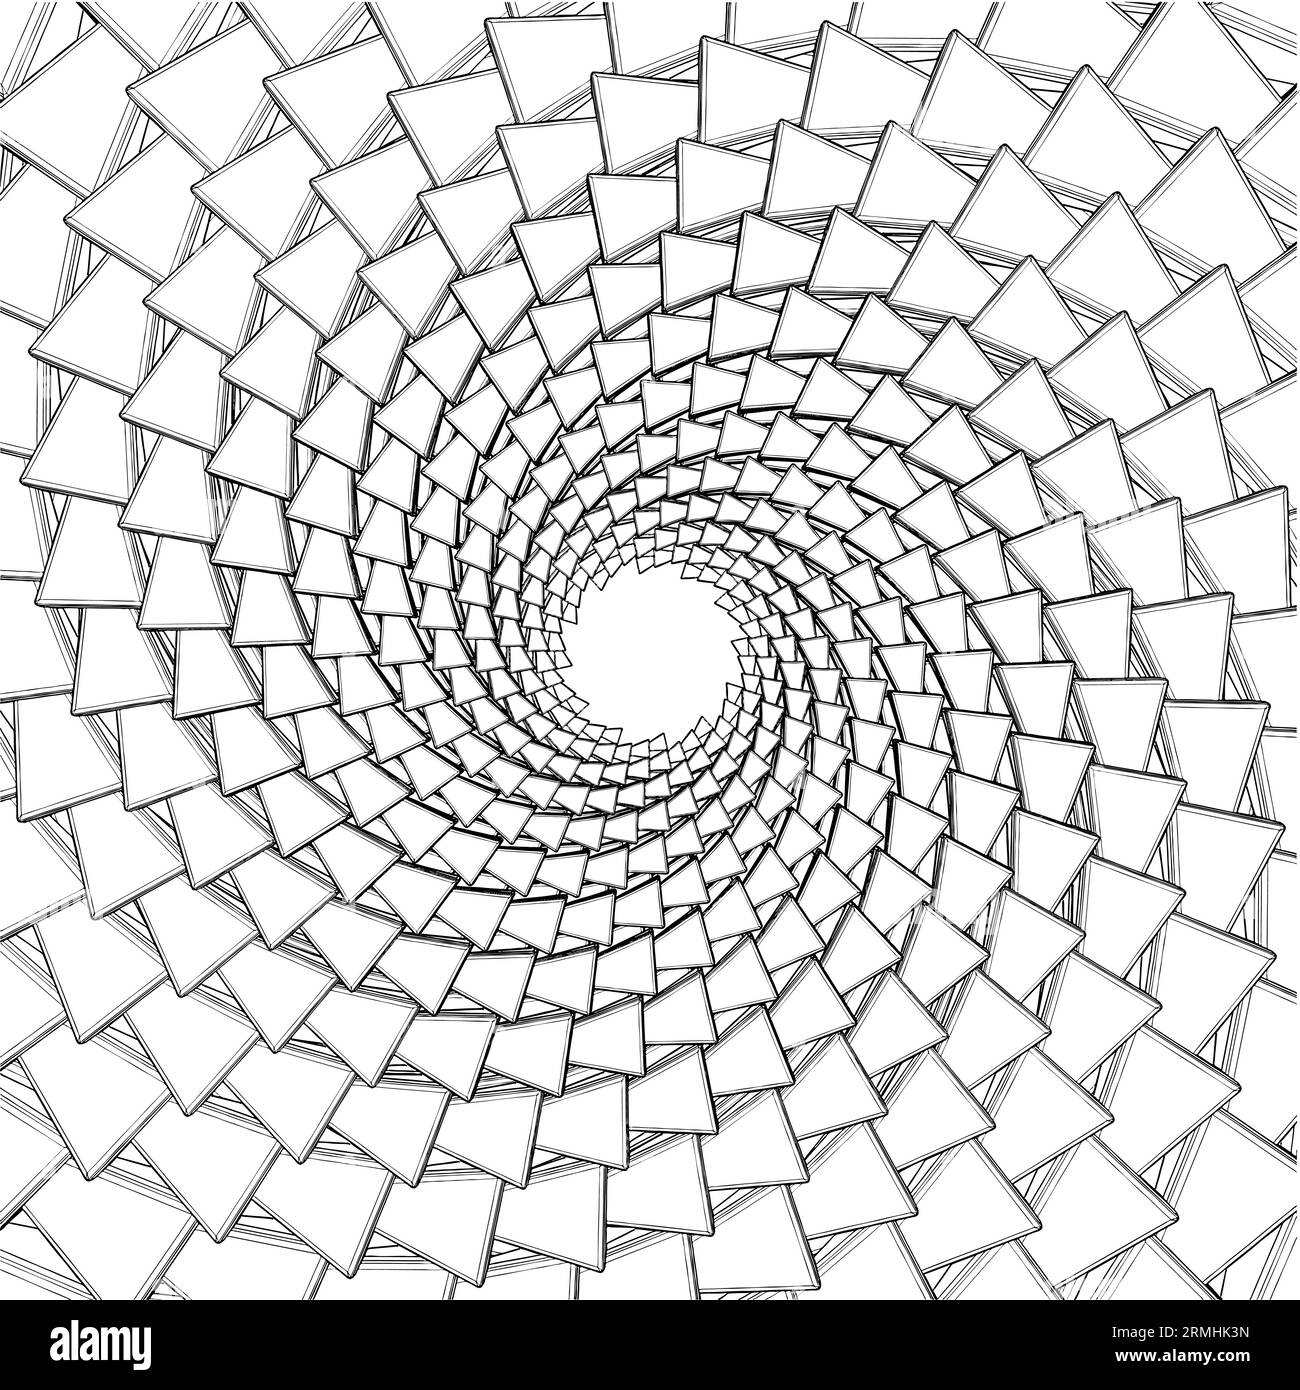 Spiral motion illusion. Black round helix shape